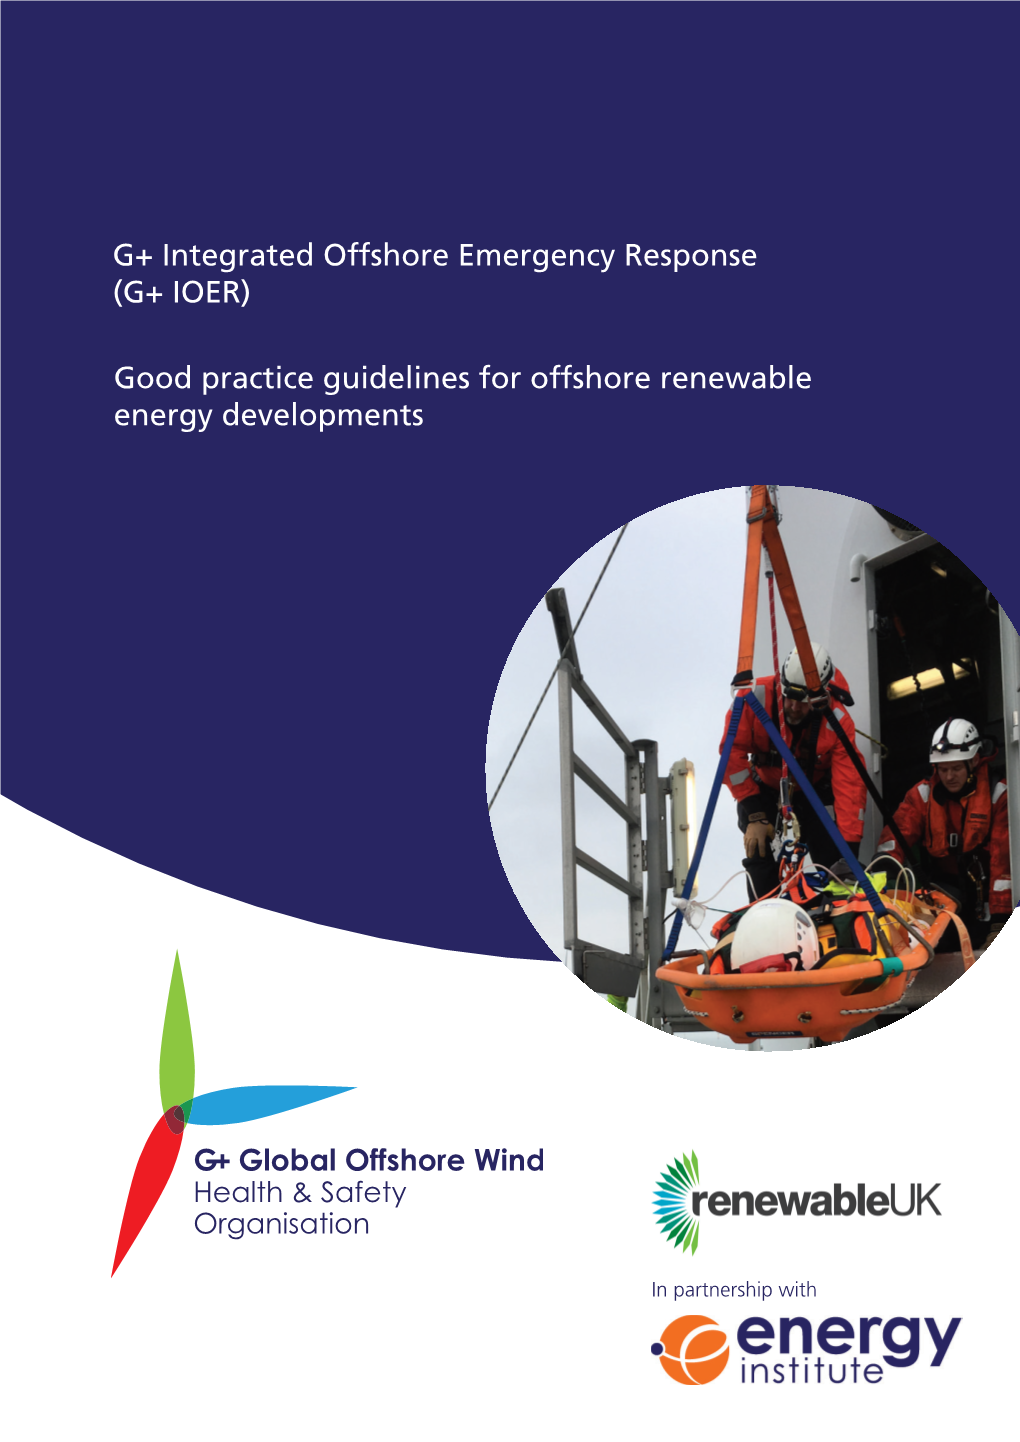 (G+ IOER) Good Practice Guidelines for Offshore Renewable Energy